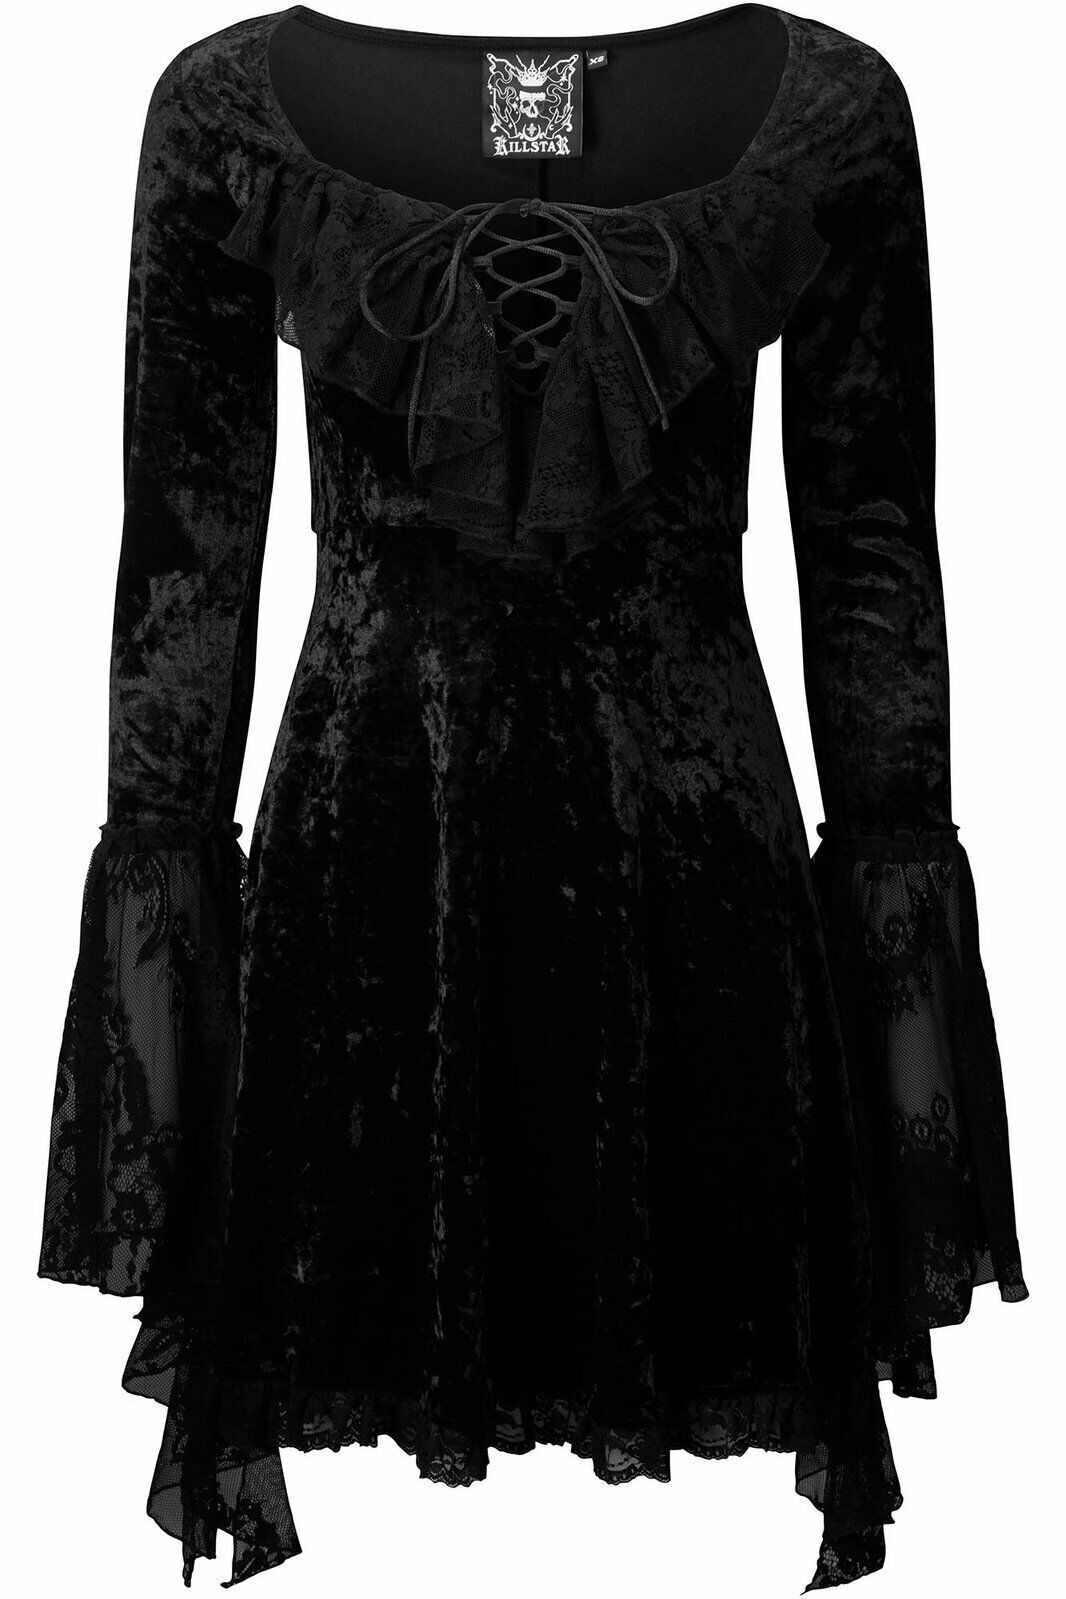 Killstar Kaira Maiden Witch Gothic Punk Alternative Lace Velvet Dress ...